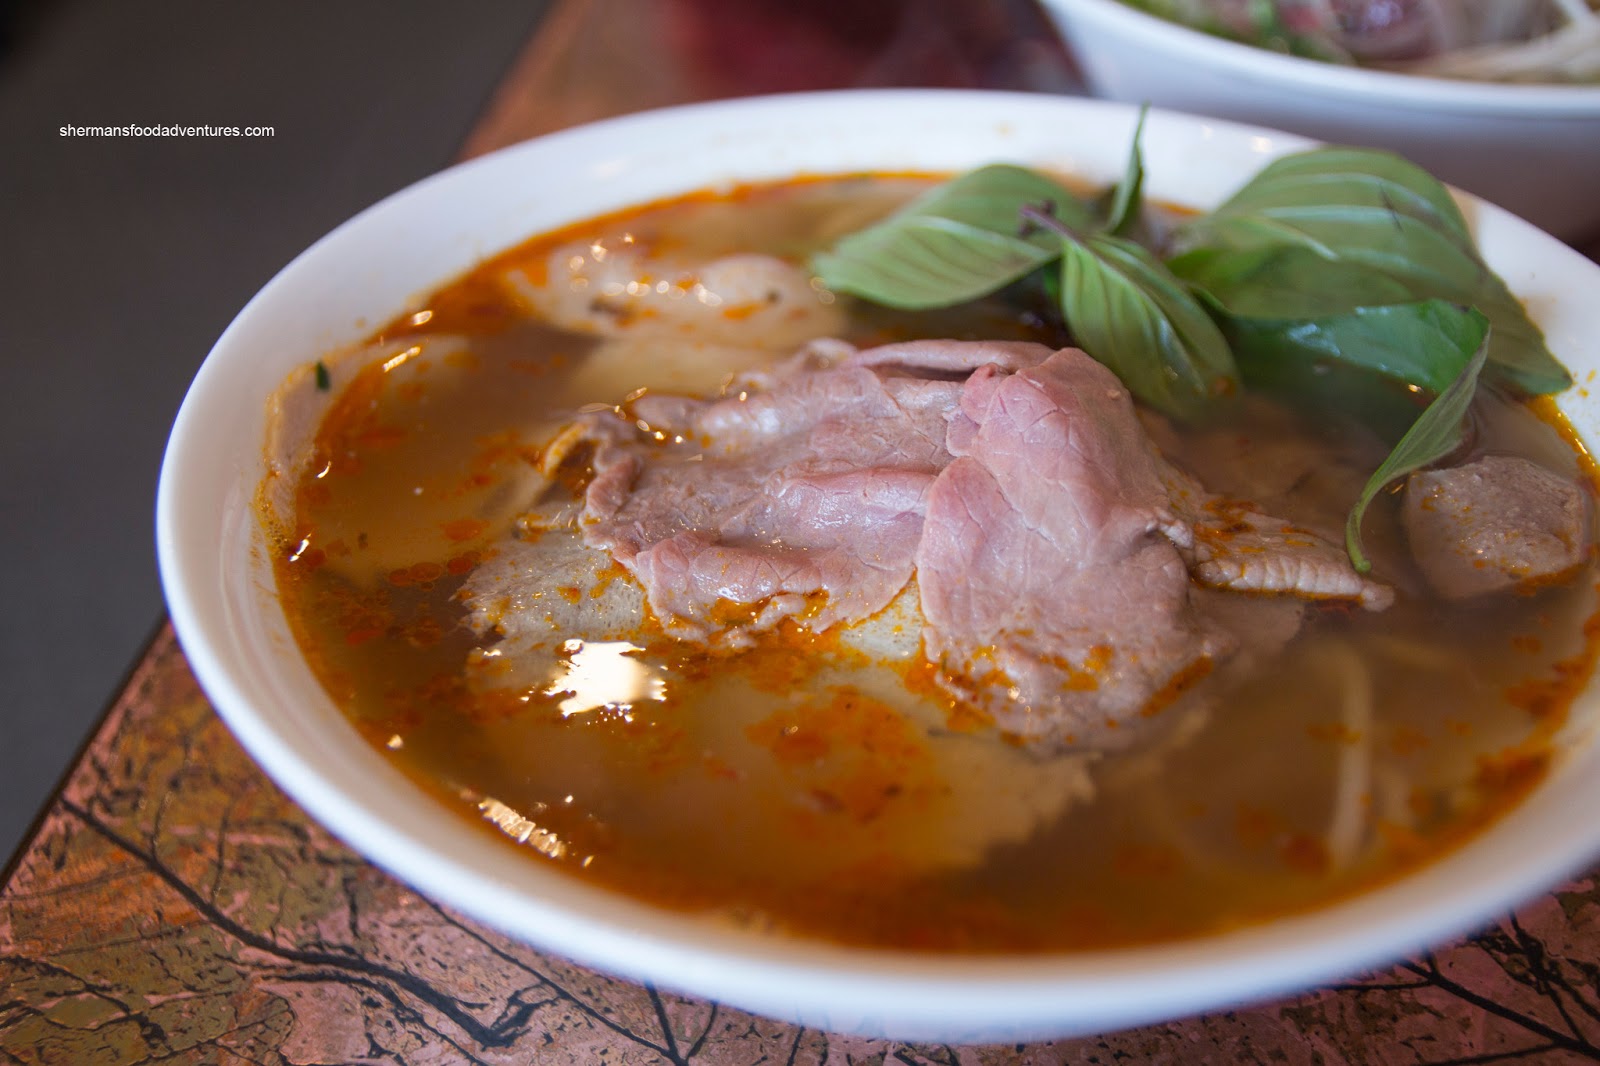 Sherman's Food Adventures: Mai's Vietnamese Restaurant